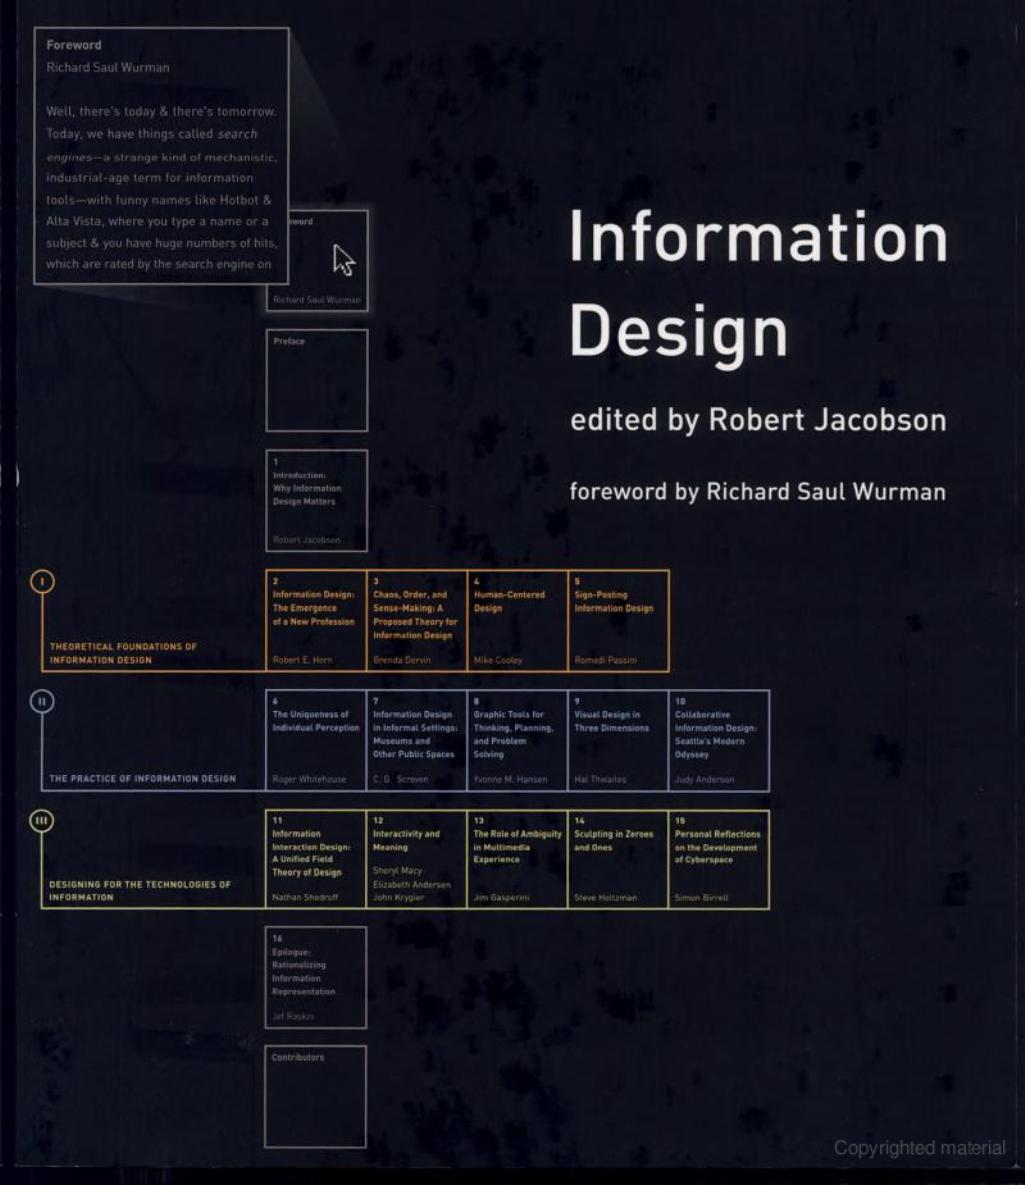 2000-information-design